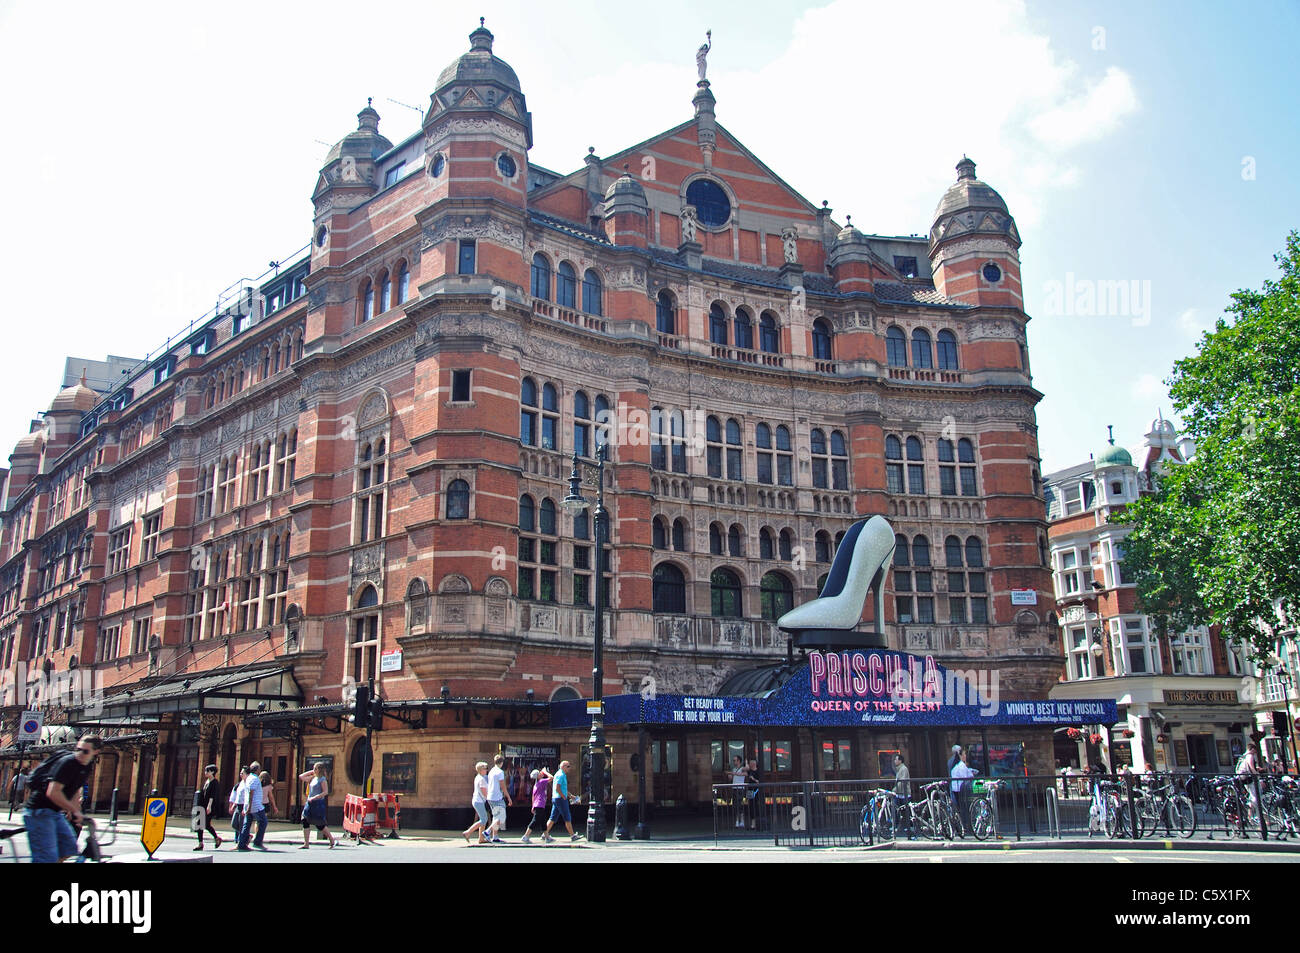 Das Schlosstheater, Cambridge Circus, Soho, West End, City of Westminster, Greater London, England, Vereinigtes Königreich Stockfoto